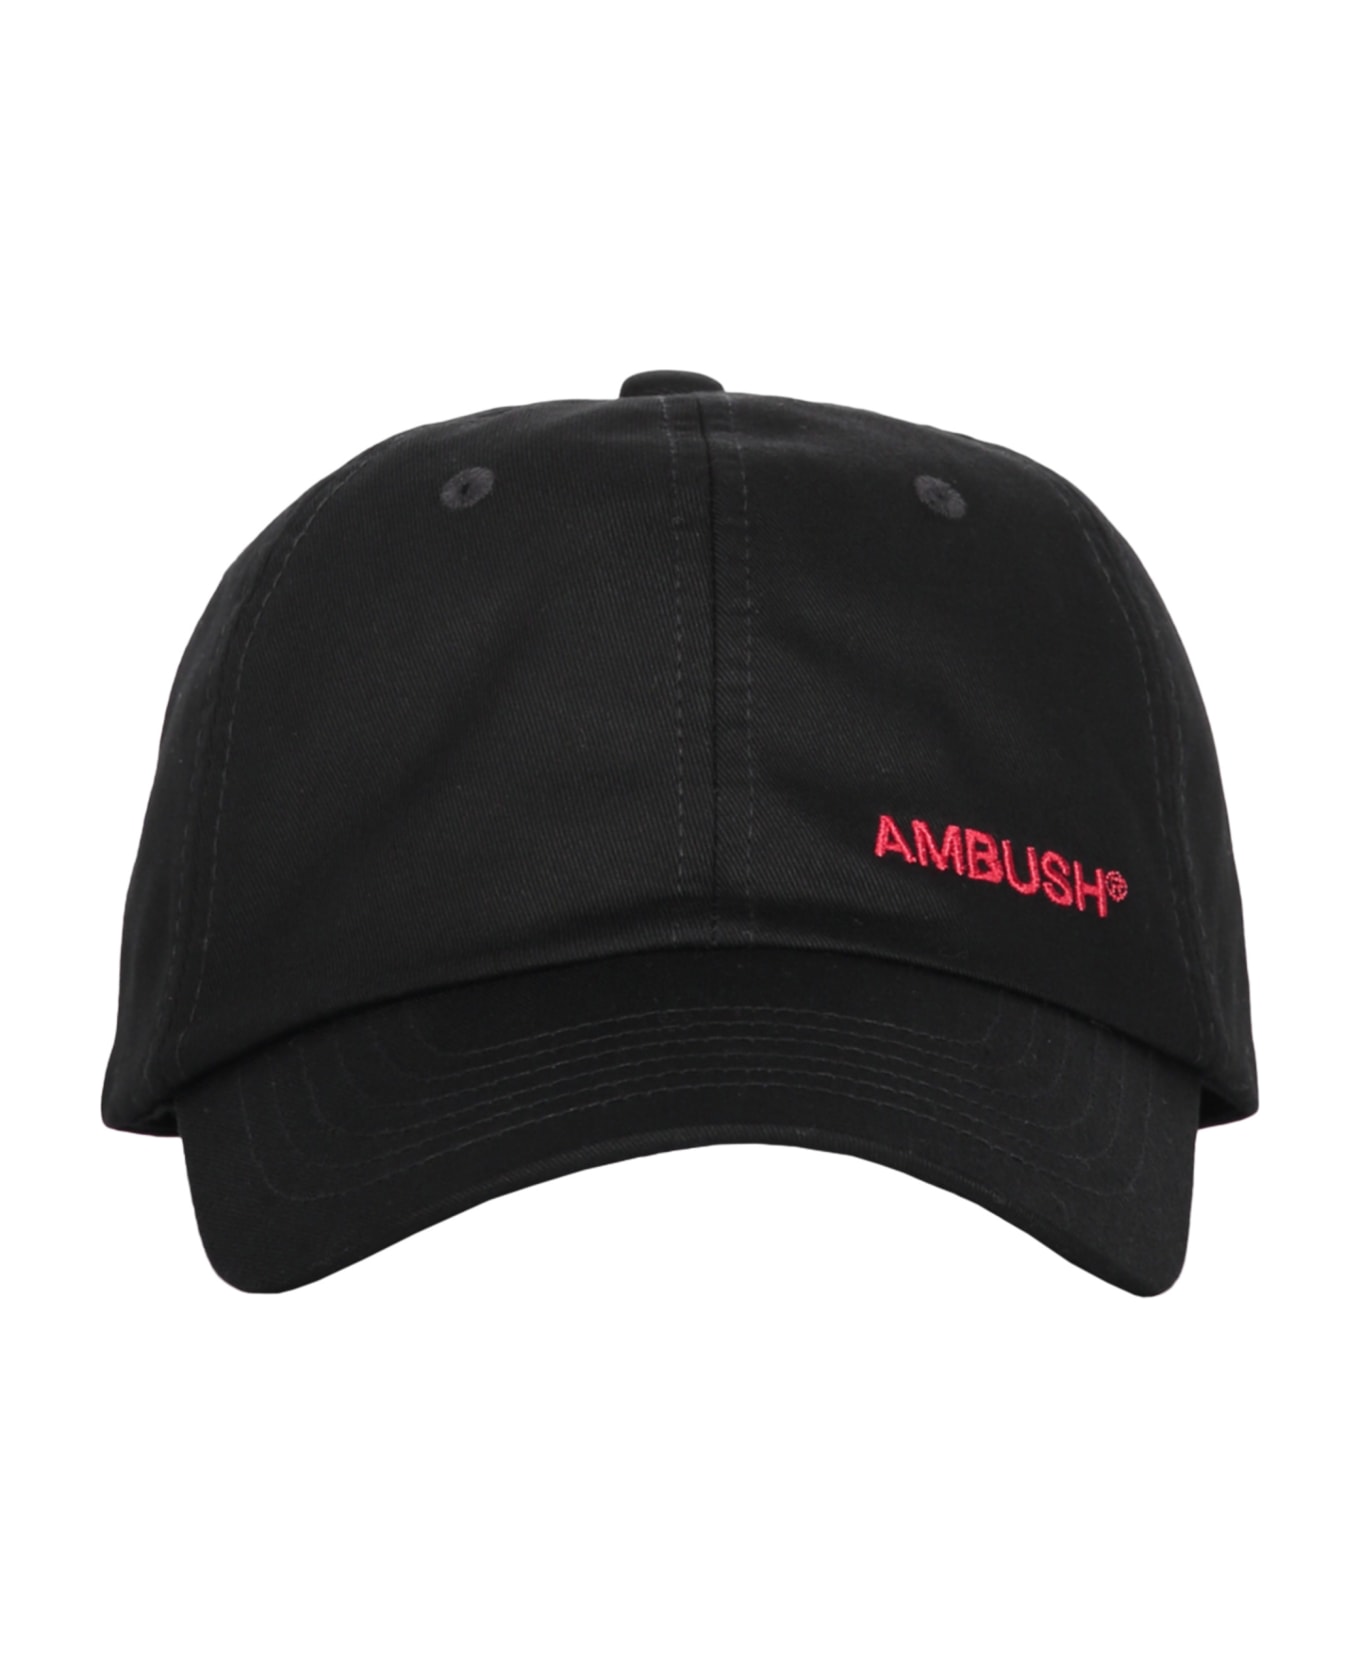 AMBUSH Baseball Cap - black